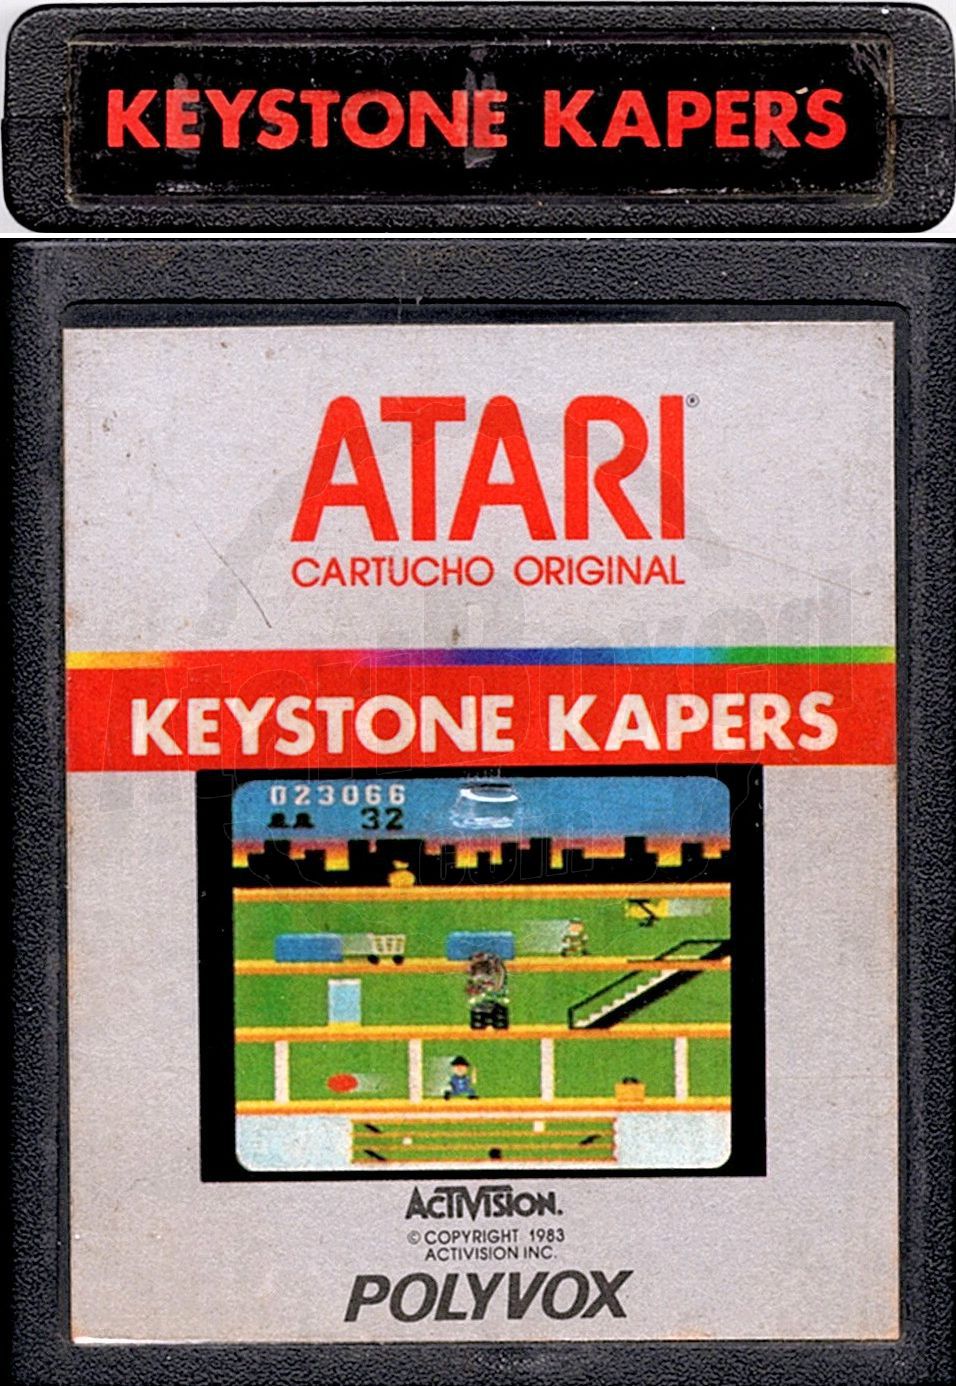 First Three Levels) Keystone Kapers, Atari 5200, Activision, 1983